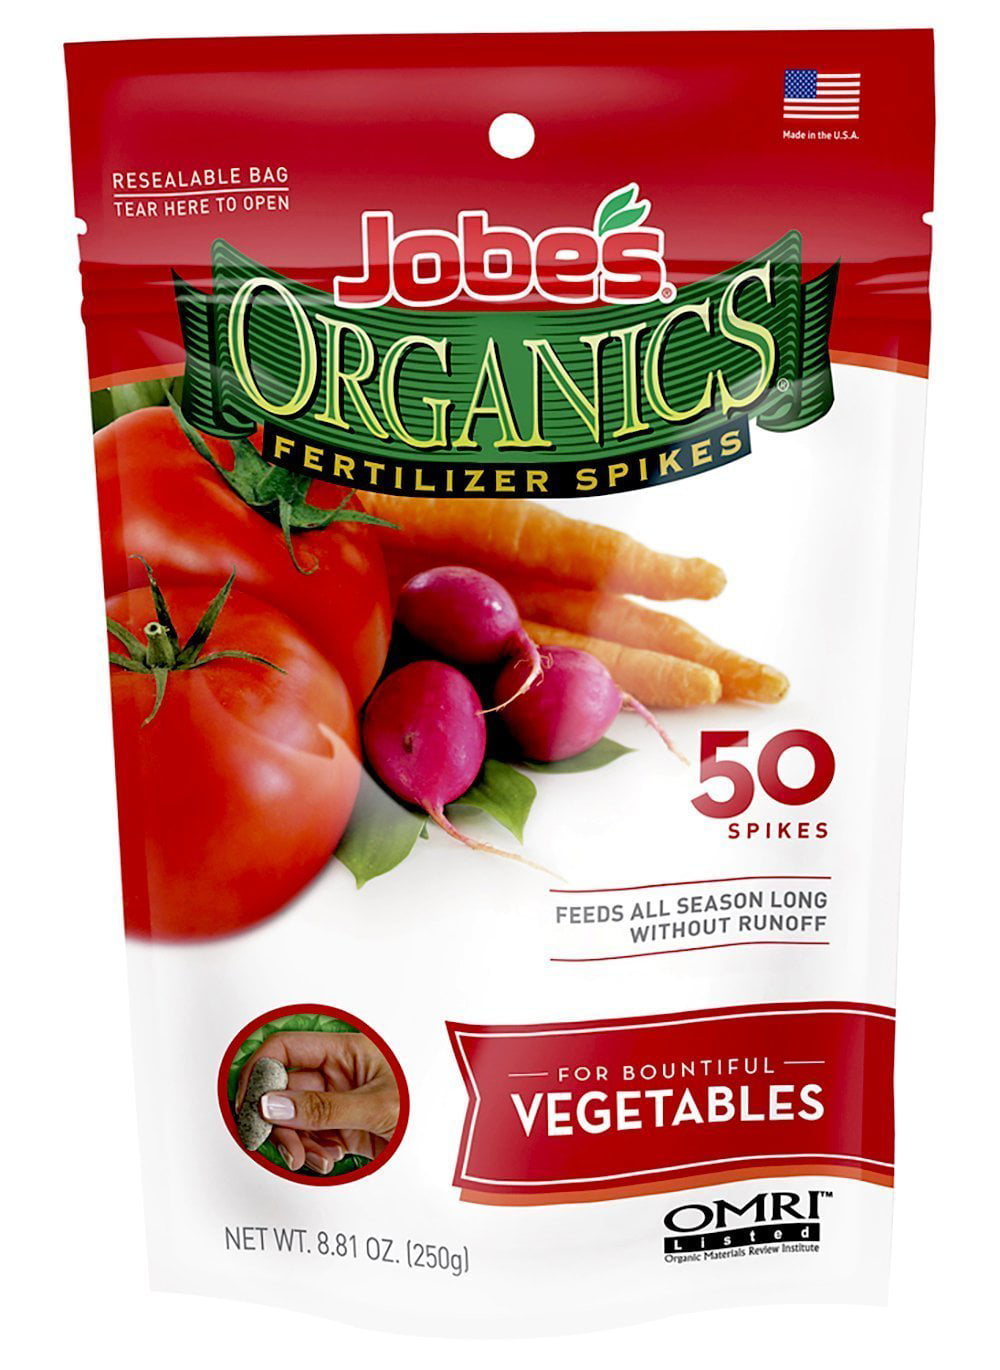 Jobes Organics Fertilizer Spikes for Vegetables 2-7-4